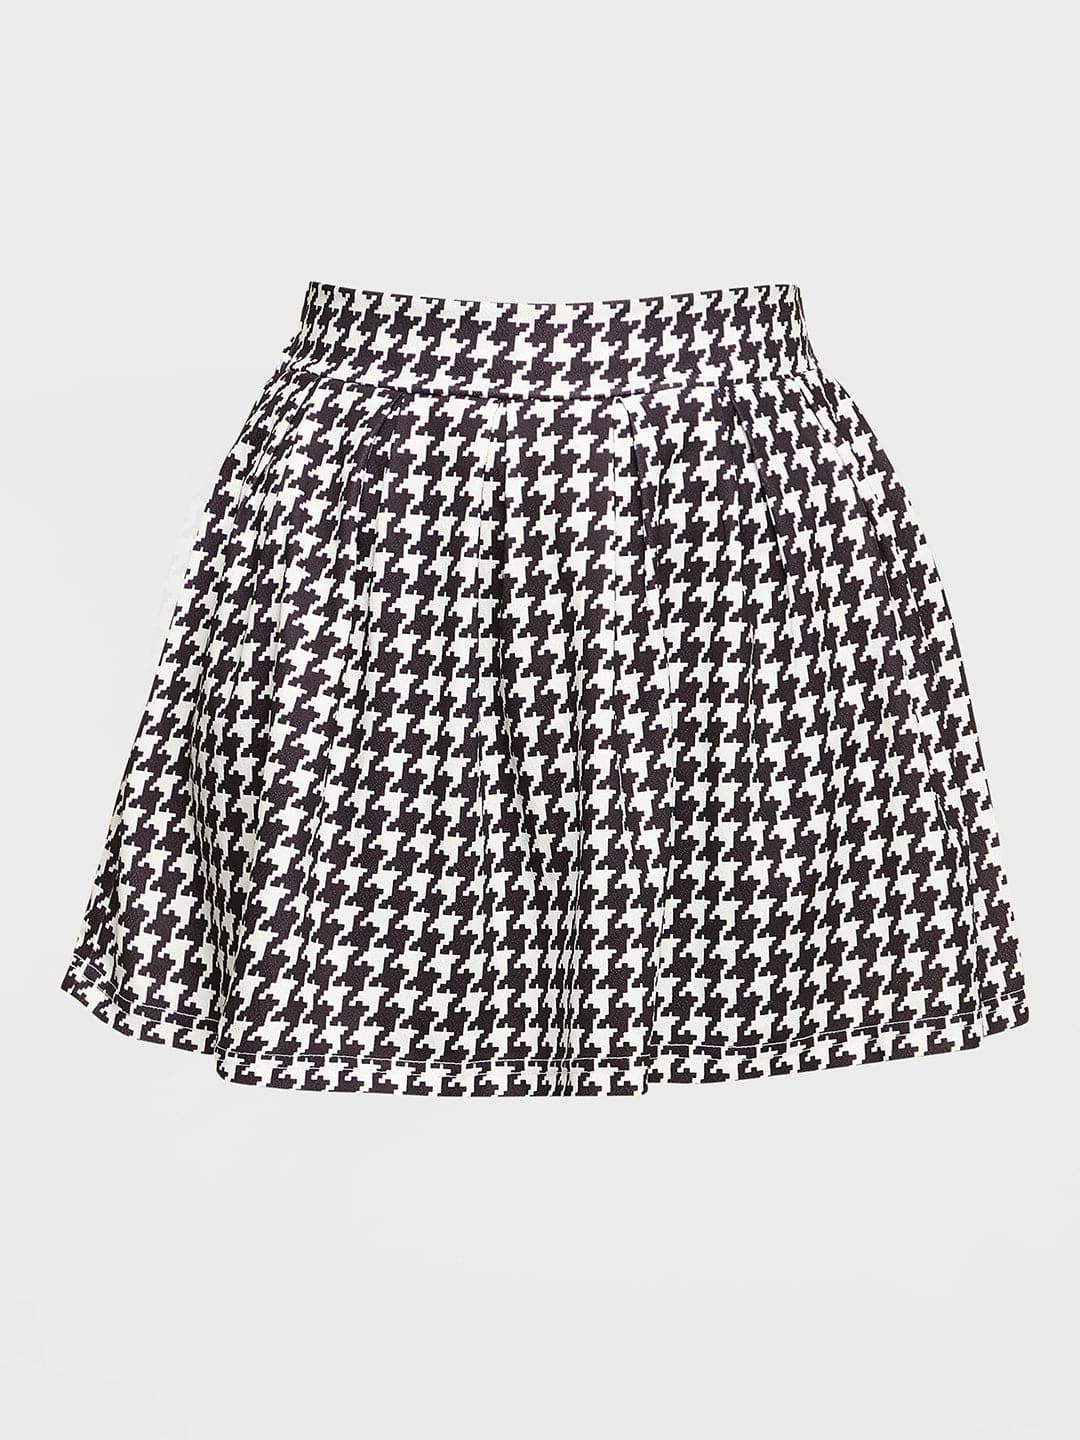 Black & White Houndstooth Pleated Skirt -Noh.Voh